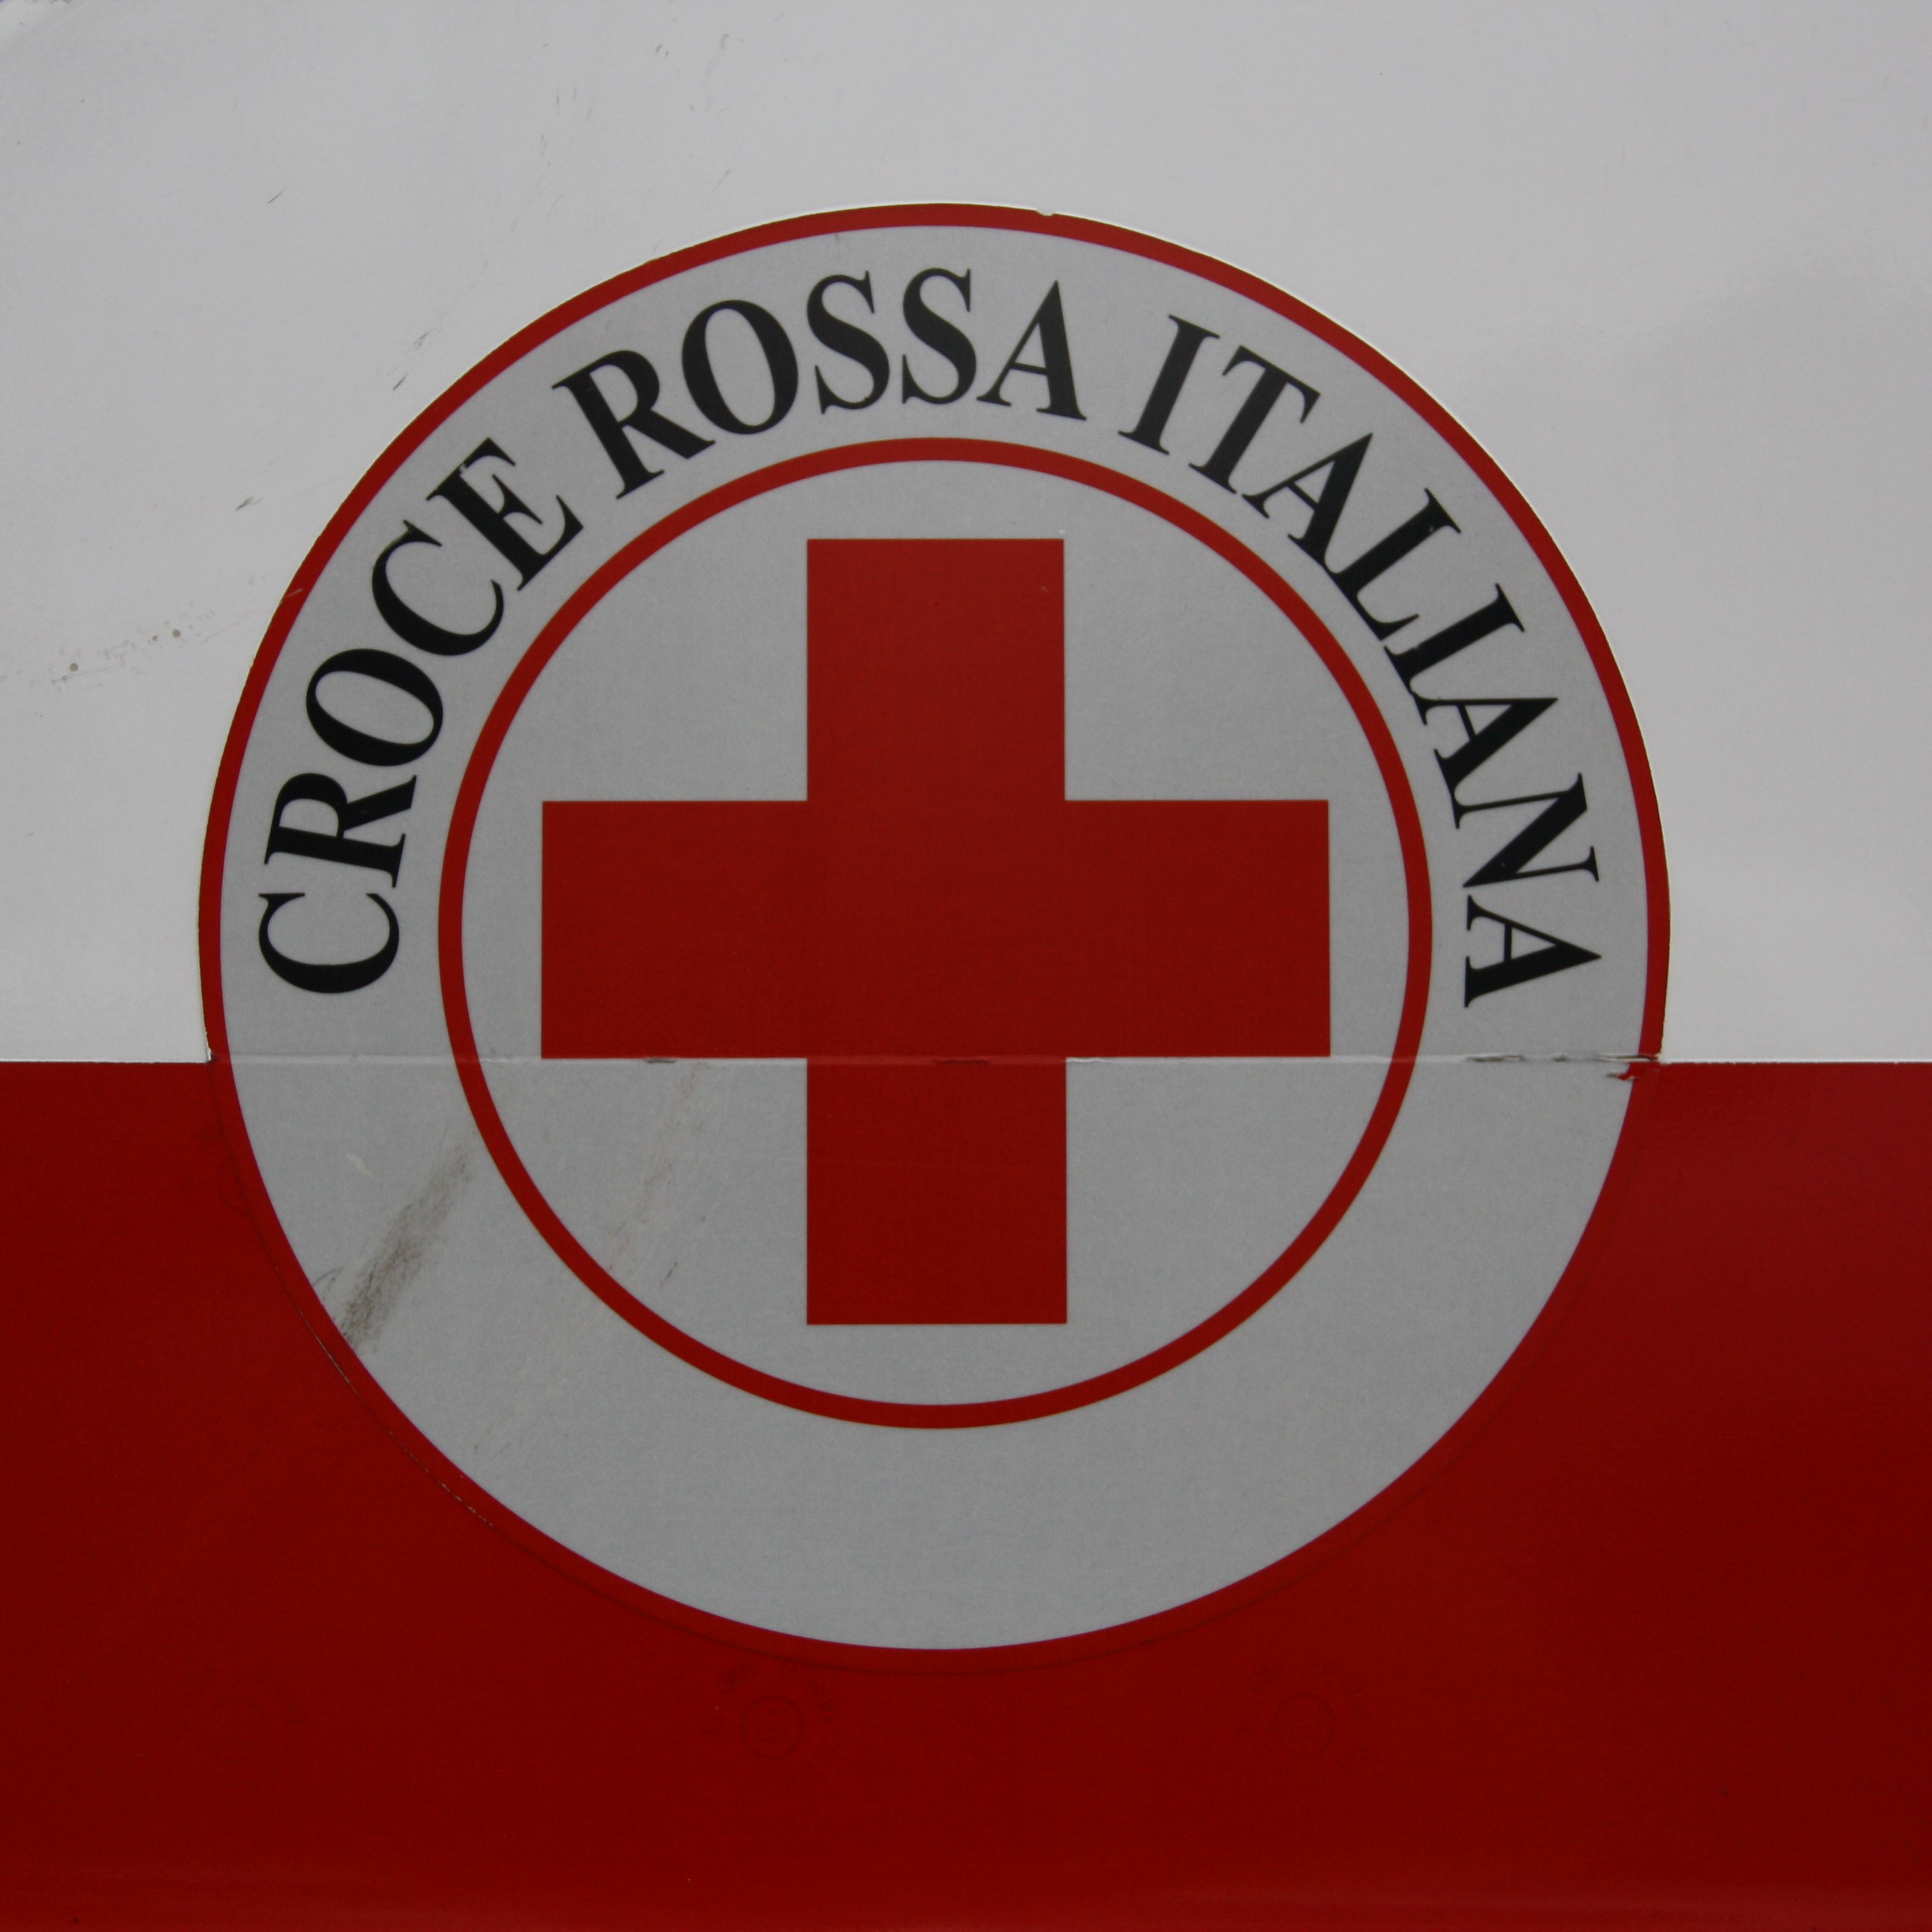 https://upload.wikimedia.org/wikipedia/commons/a/a4/Croce_Rossa_Italiana_emblem_01.JPG